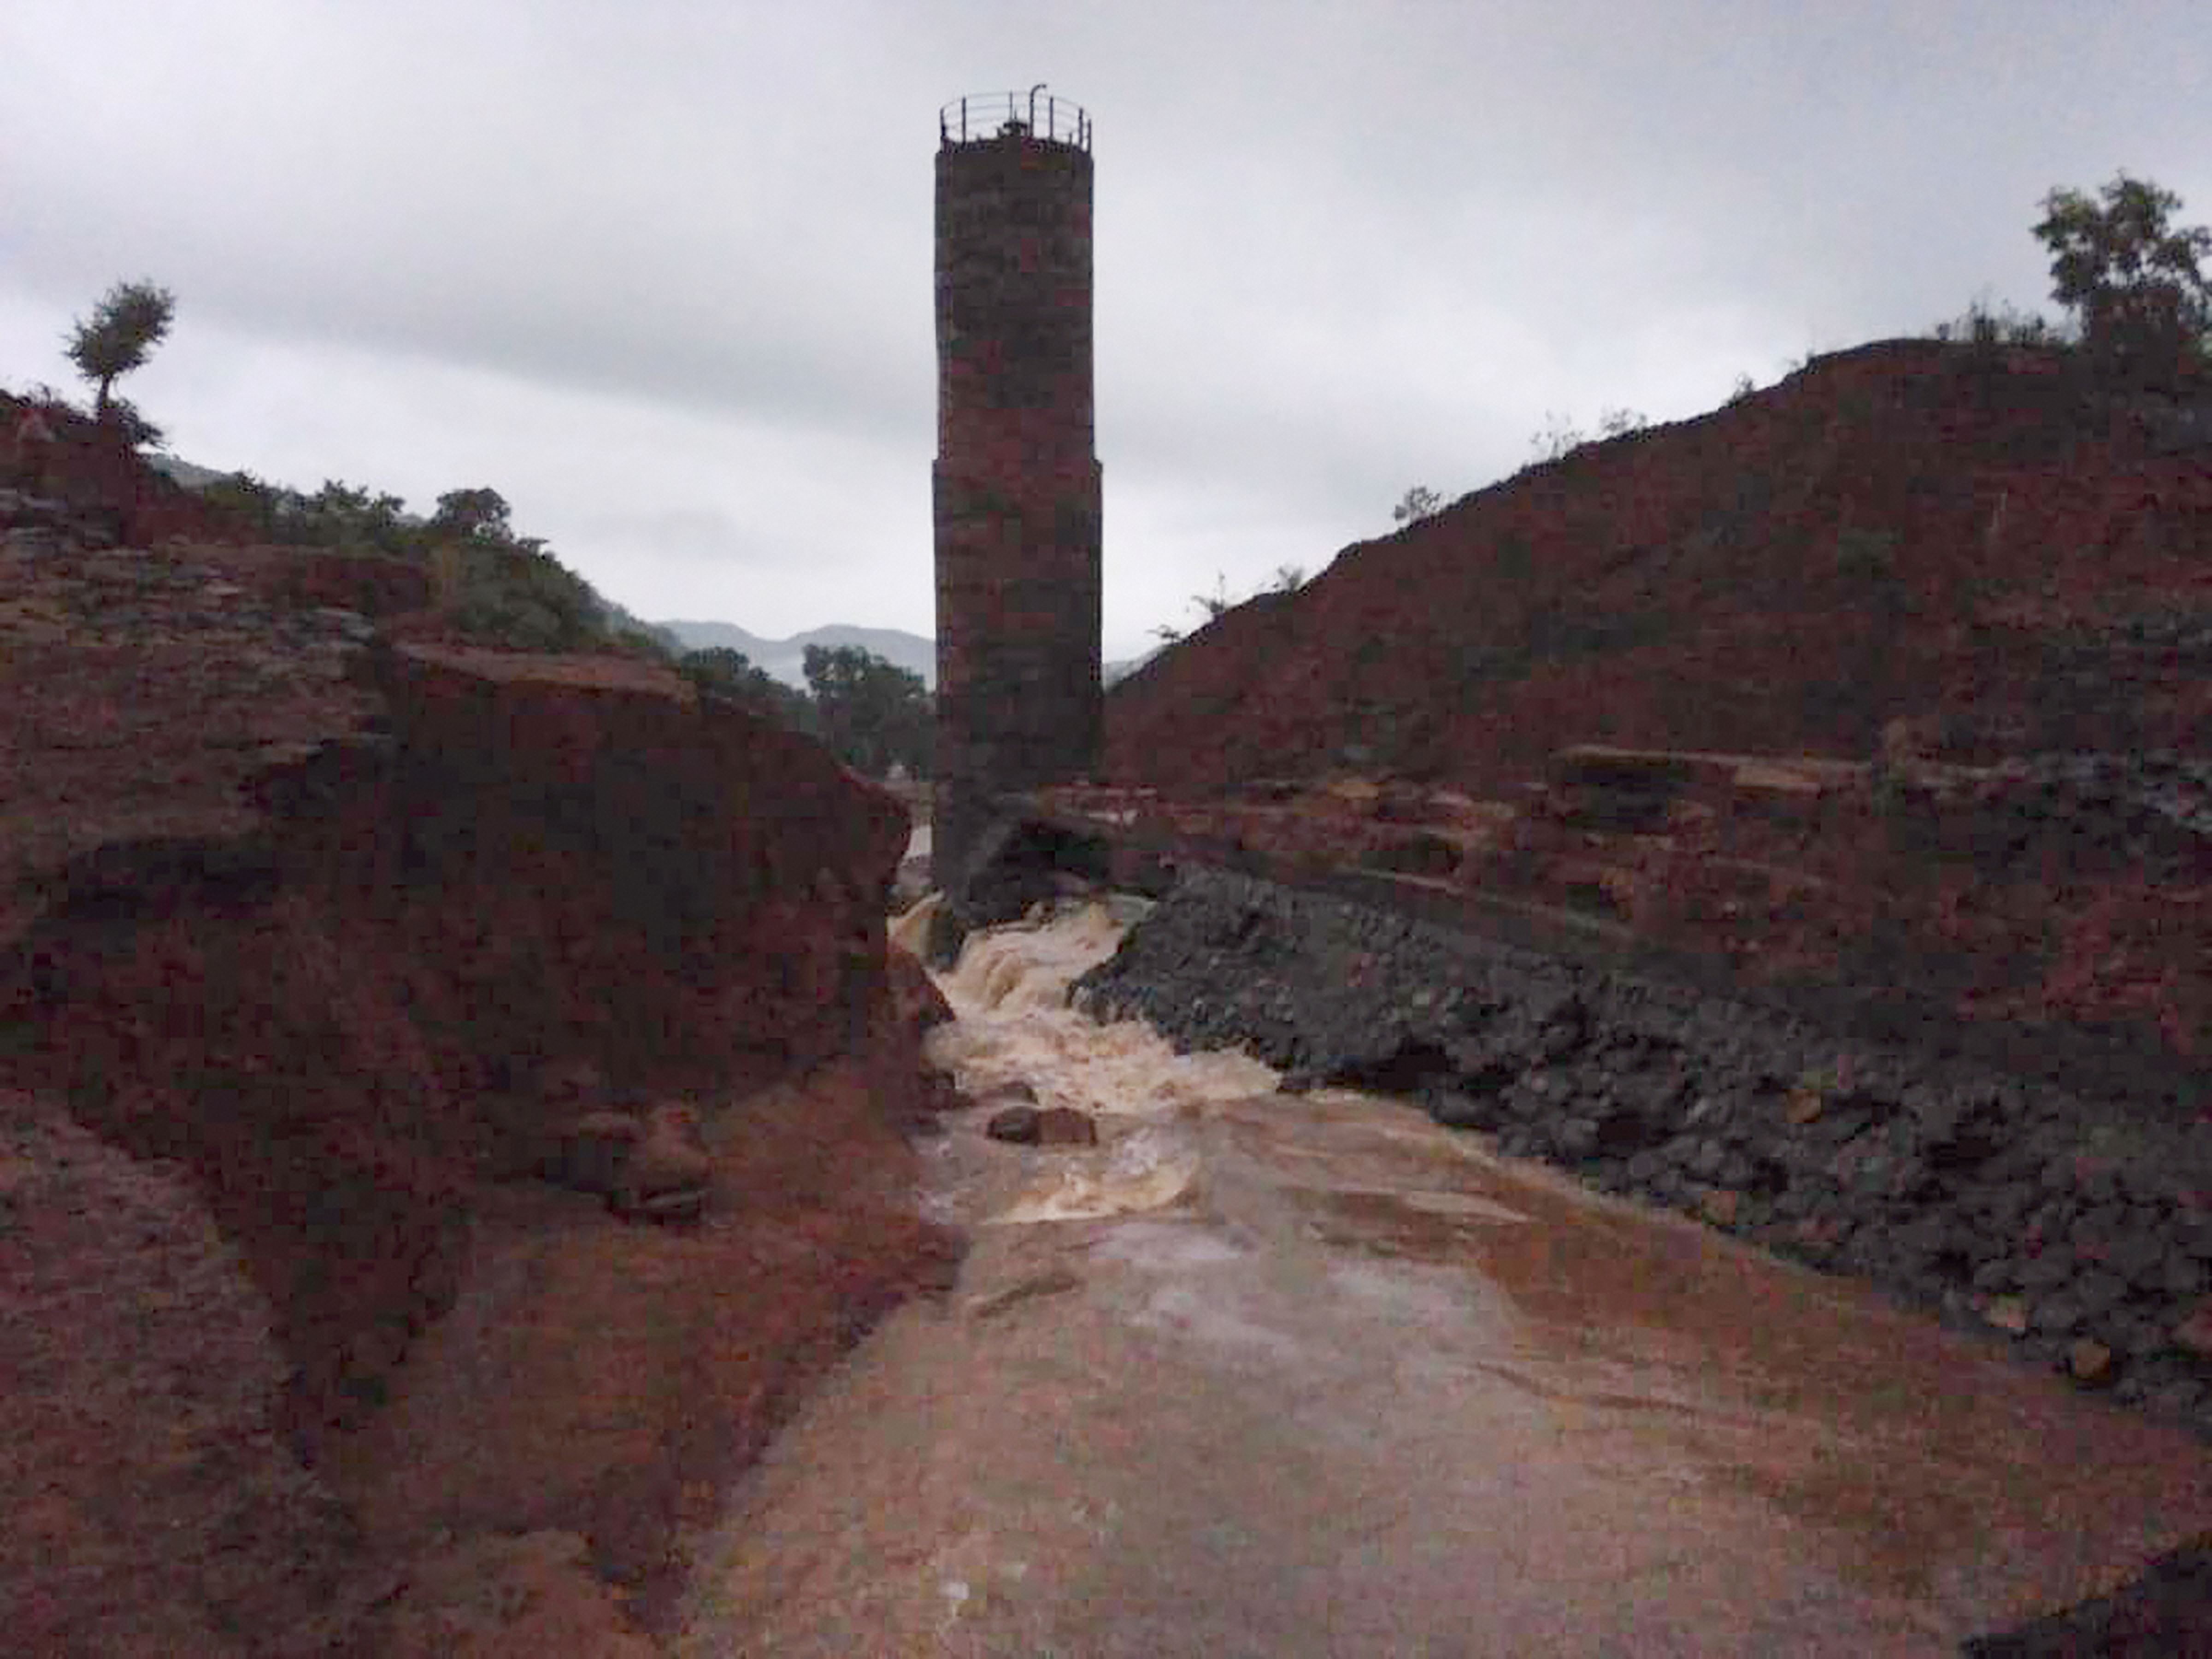 Tiware dam, Ratnagiri district, Maharashtra, breach, killed, floods, rains, The Federal, English news website